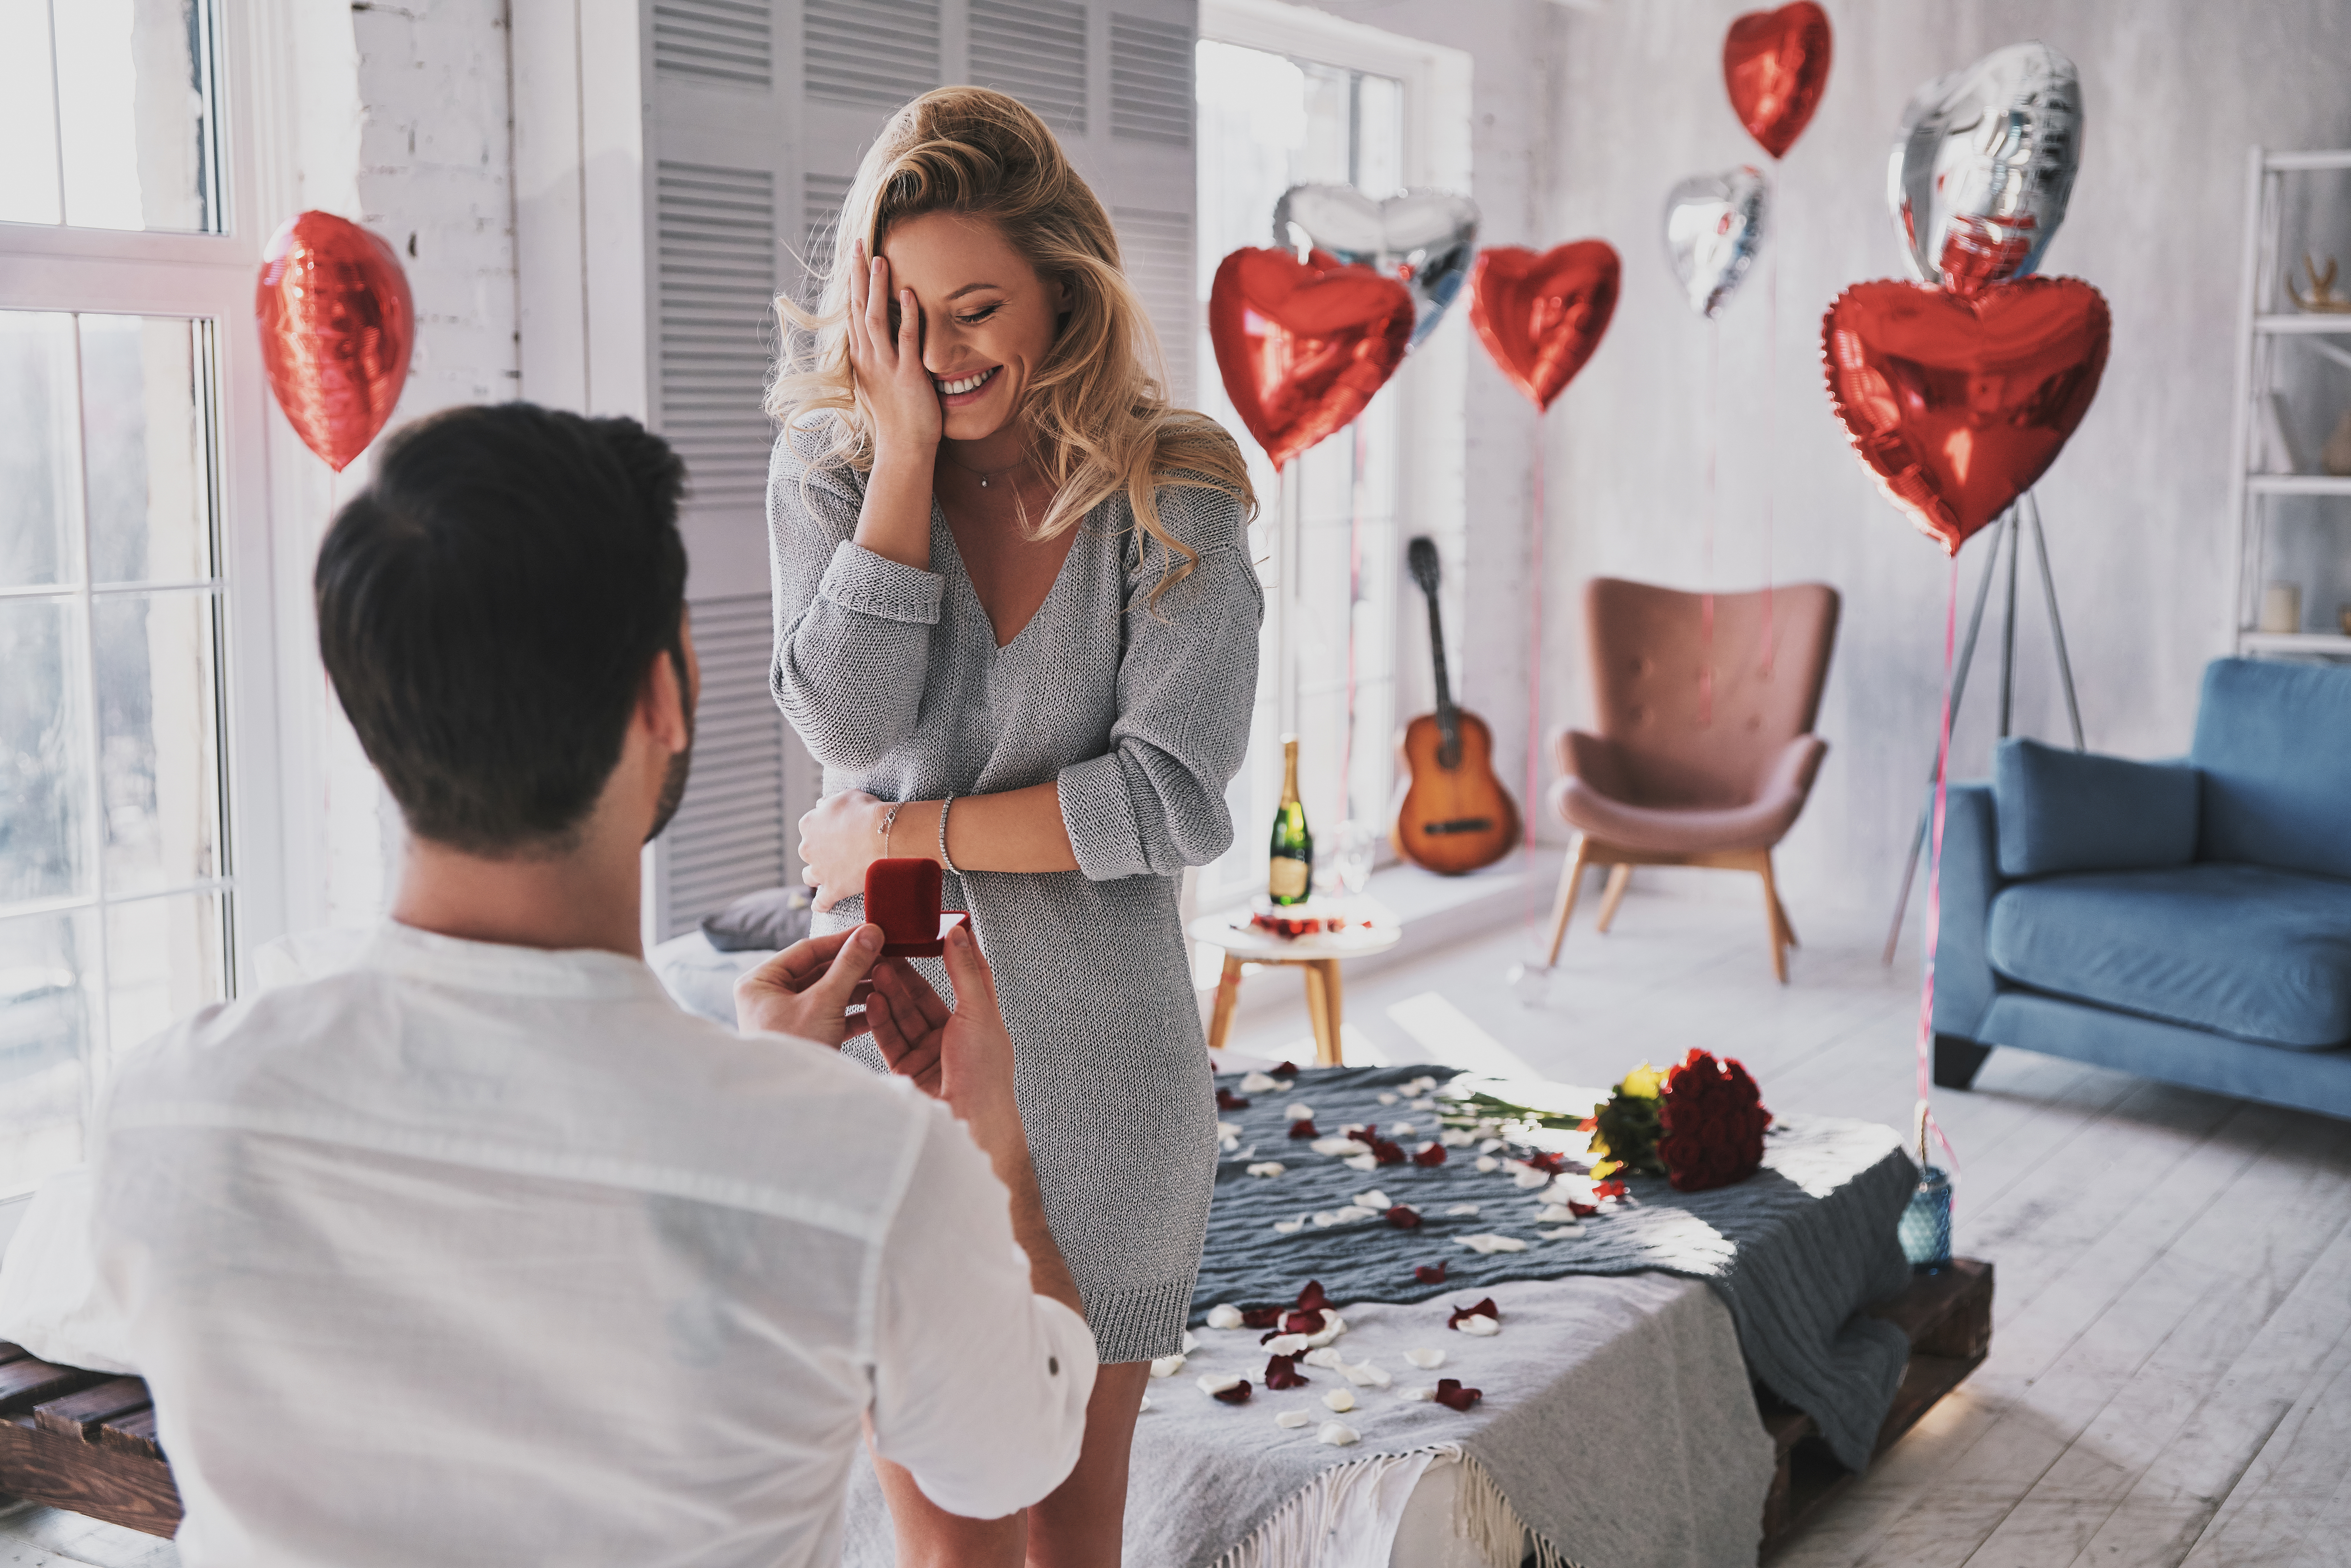 A boyfriend surprising his girlfriend with a romantic proposal | Source: Shutterstock